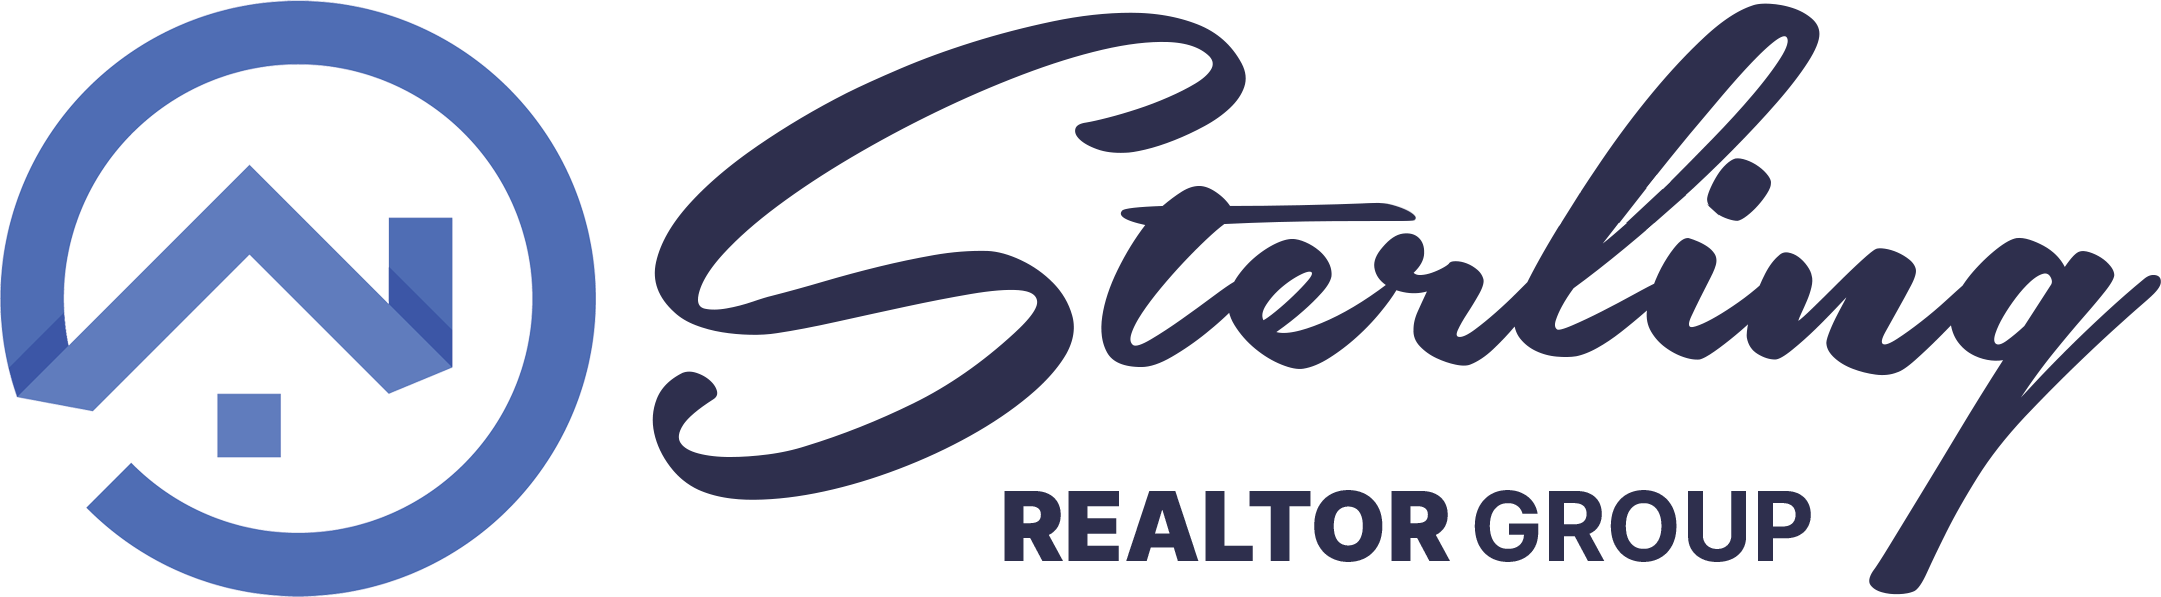 Sterling Realtor Group